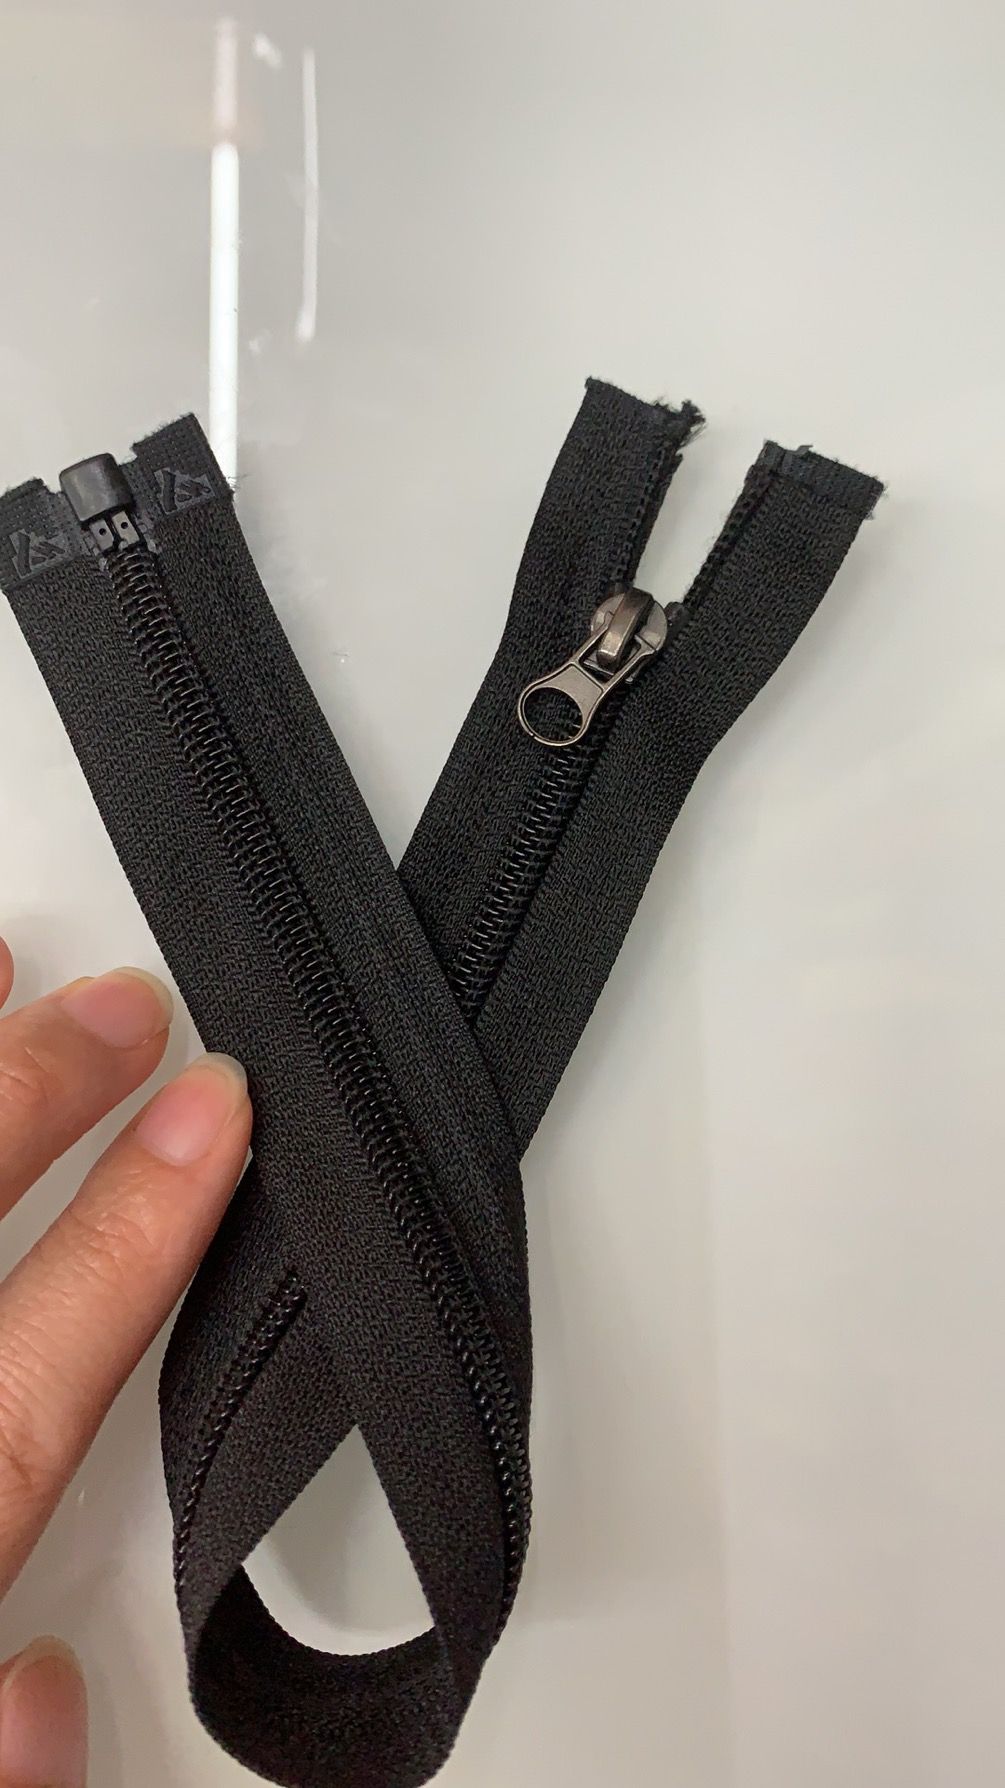 Yiwu Huada Die Casting Hongyu Zipper Factory Direct Sales 5# Nylon Open Plastic Split Clothing Zipper